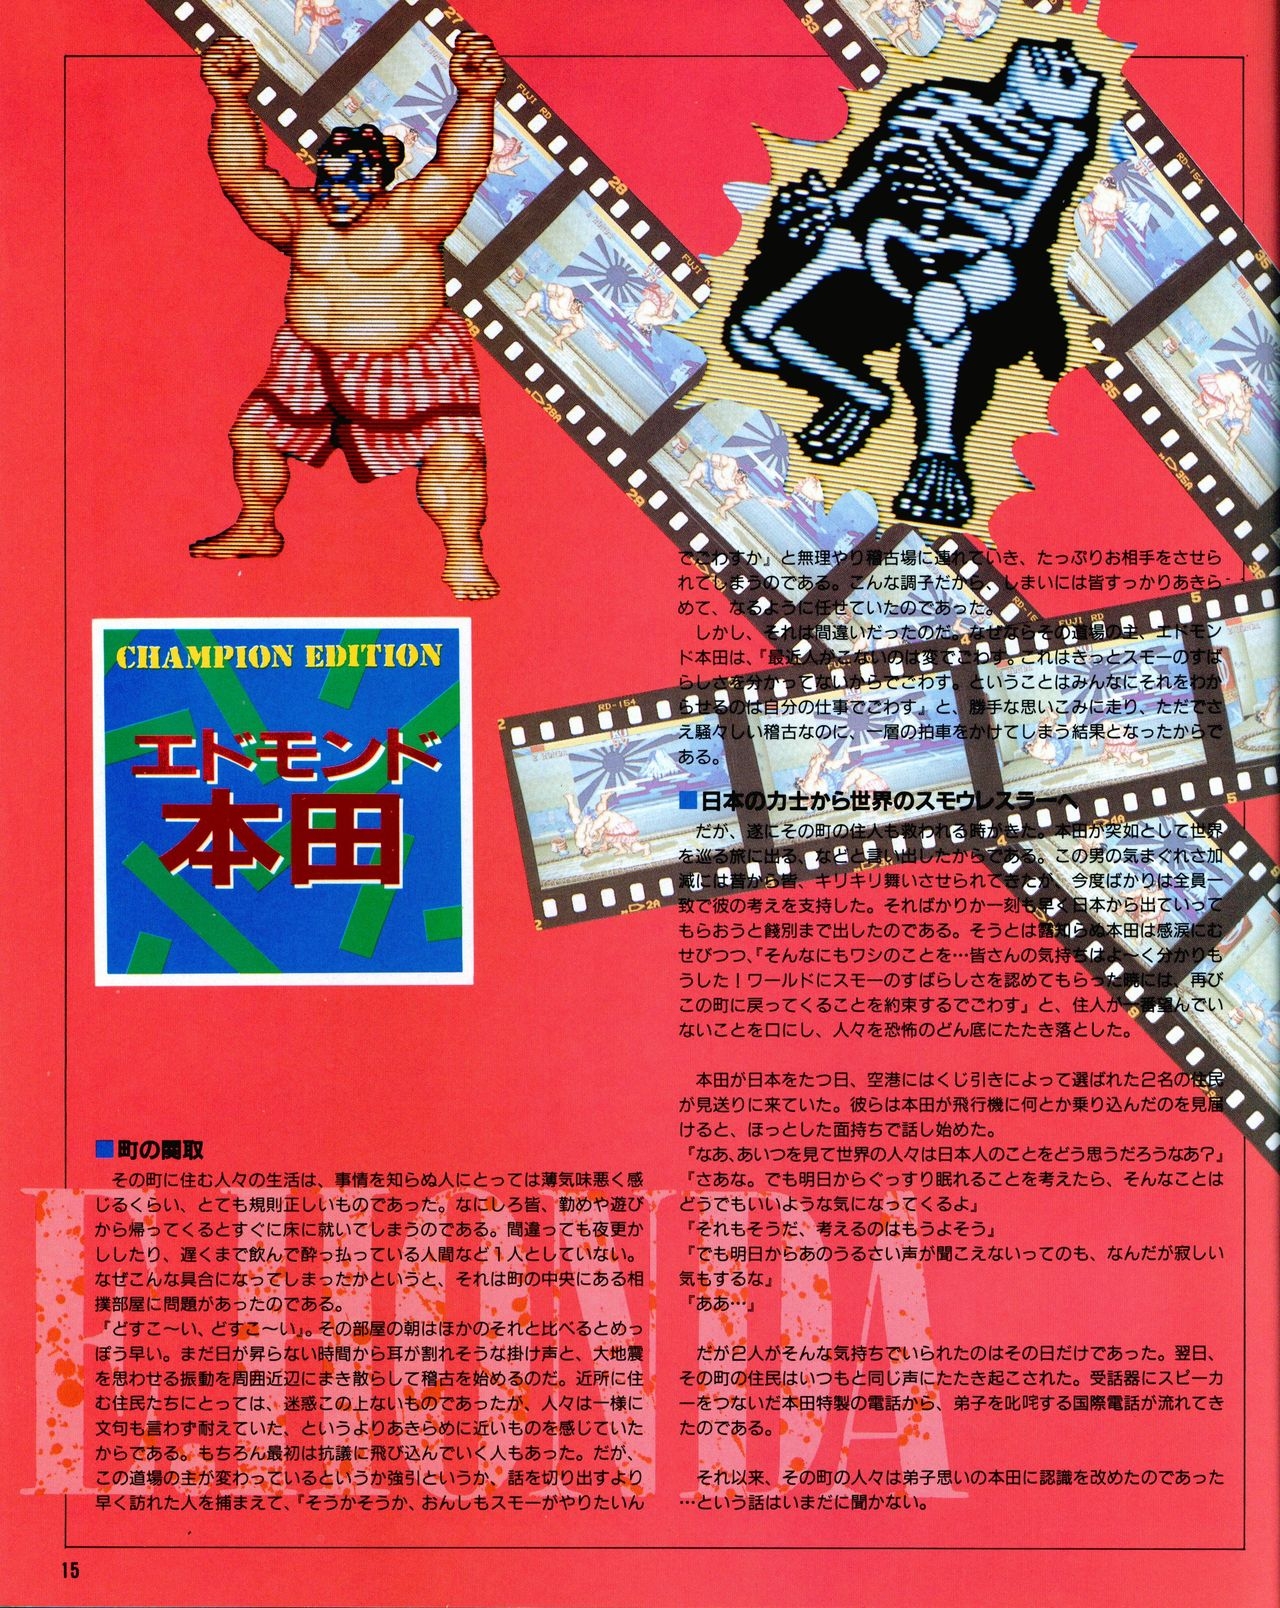 Street Fighter II Dash - Gamest special issue 77 16